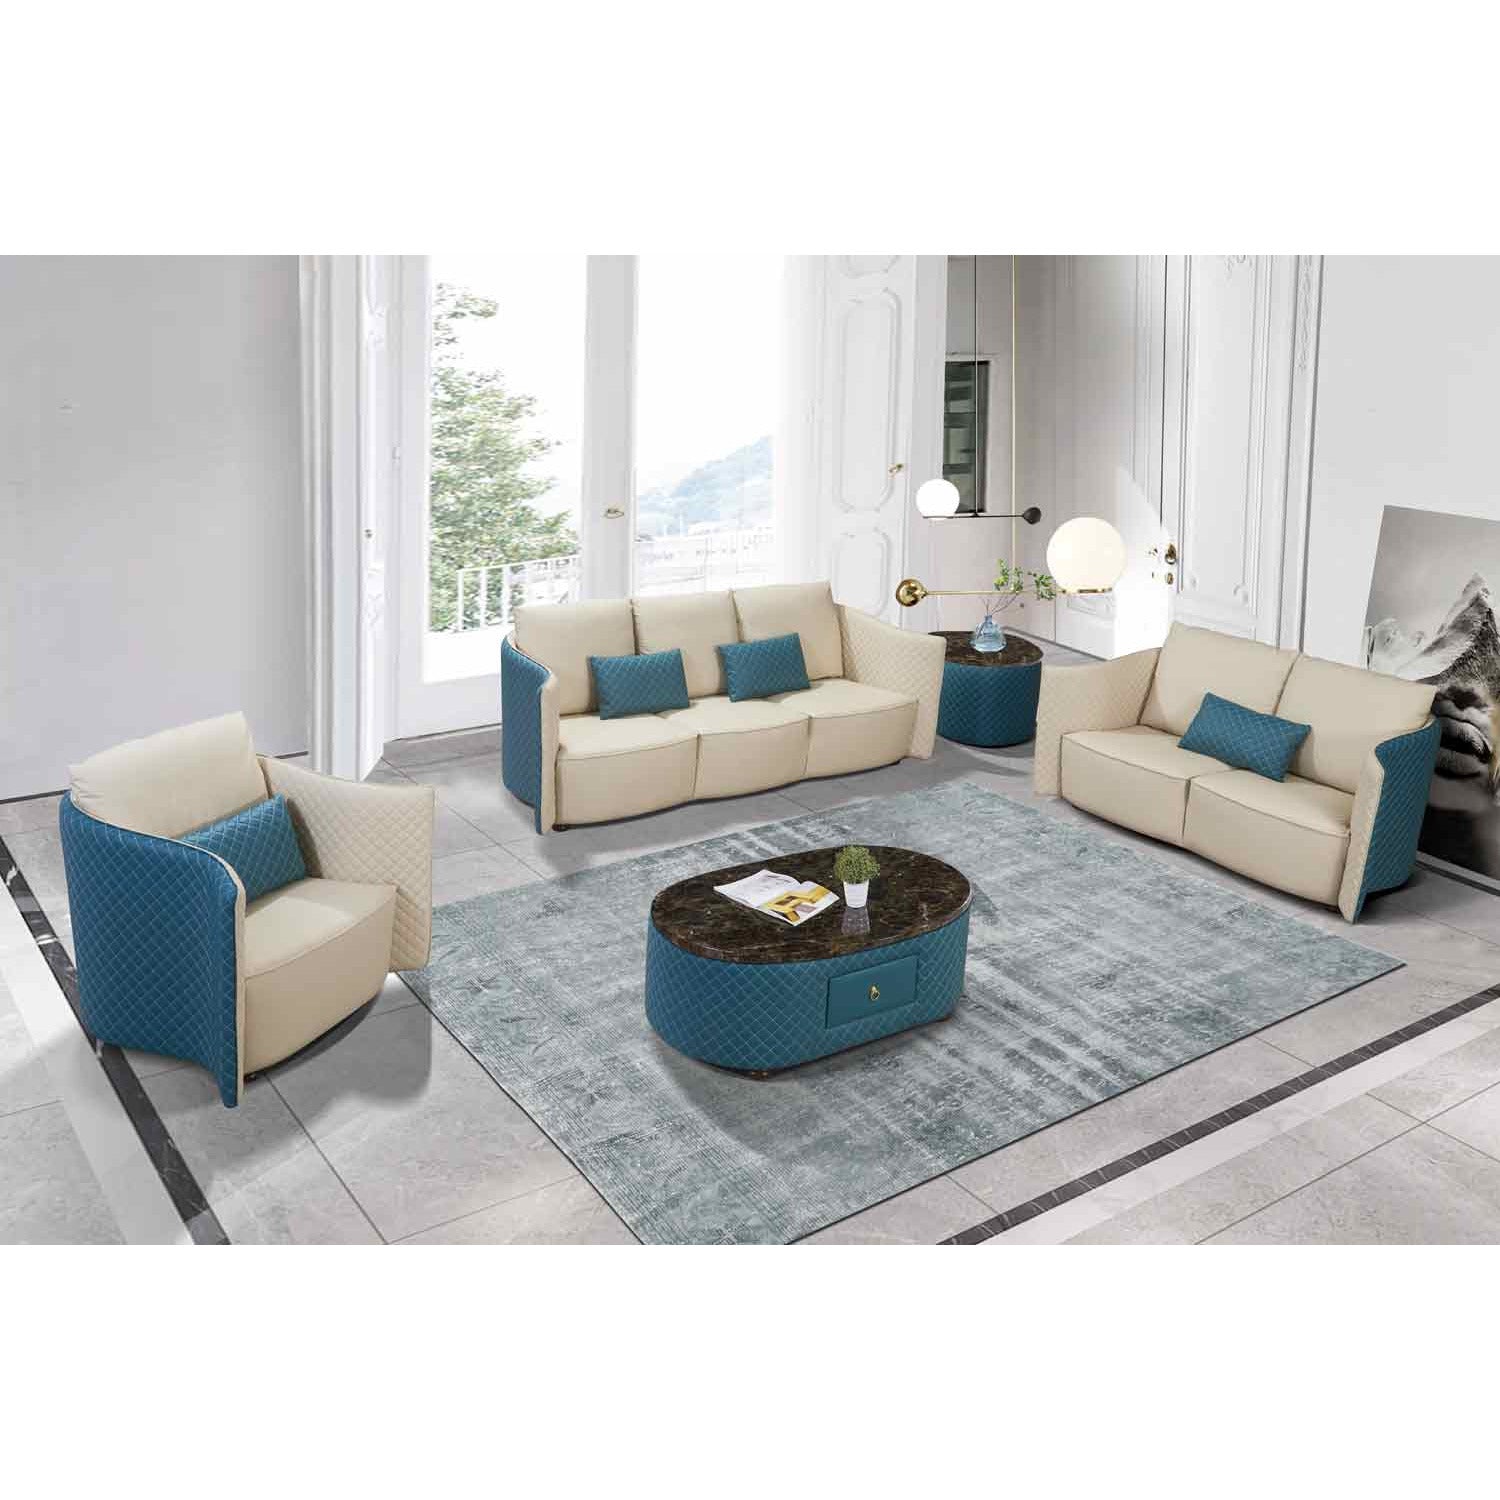 European Furniture - Makassar 3 Piece Living Room Set in Sand Beige & Blue - 52554-3SET - New Star Living